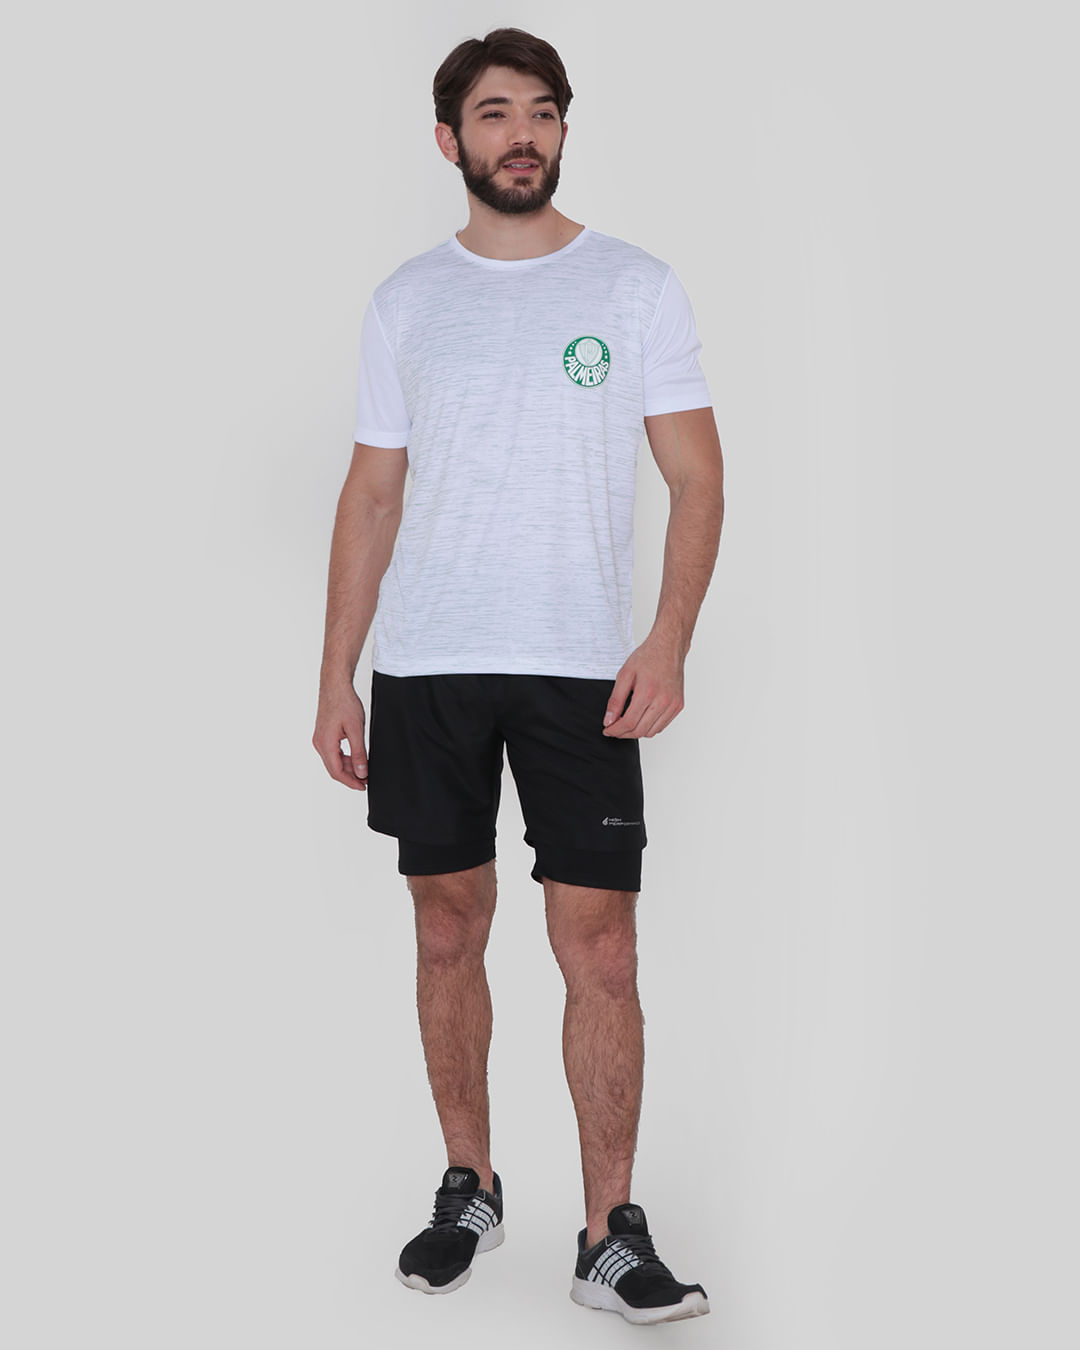 Camiseta Masculina Fitness Palmeiras Branca